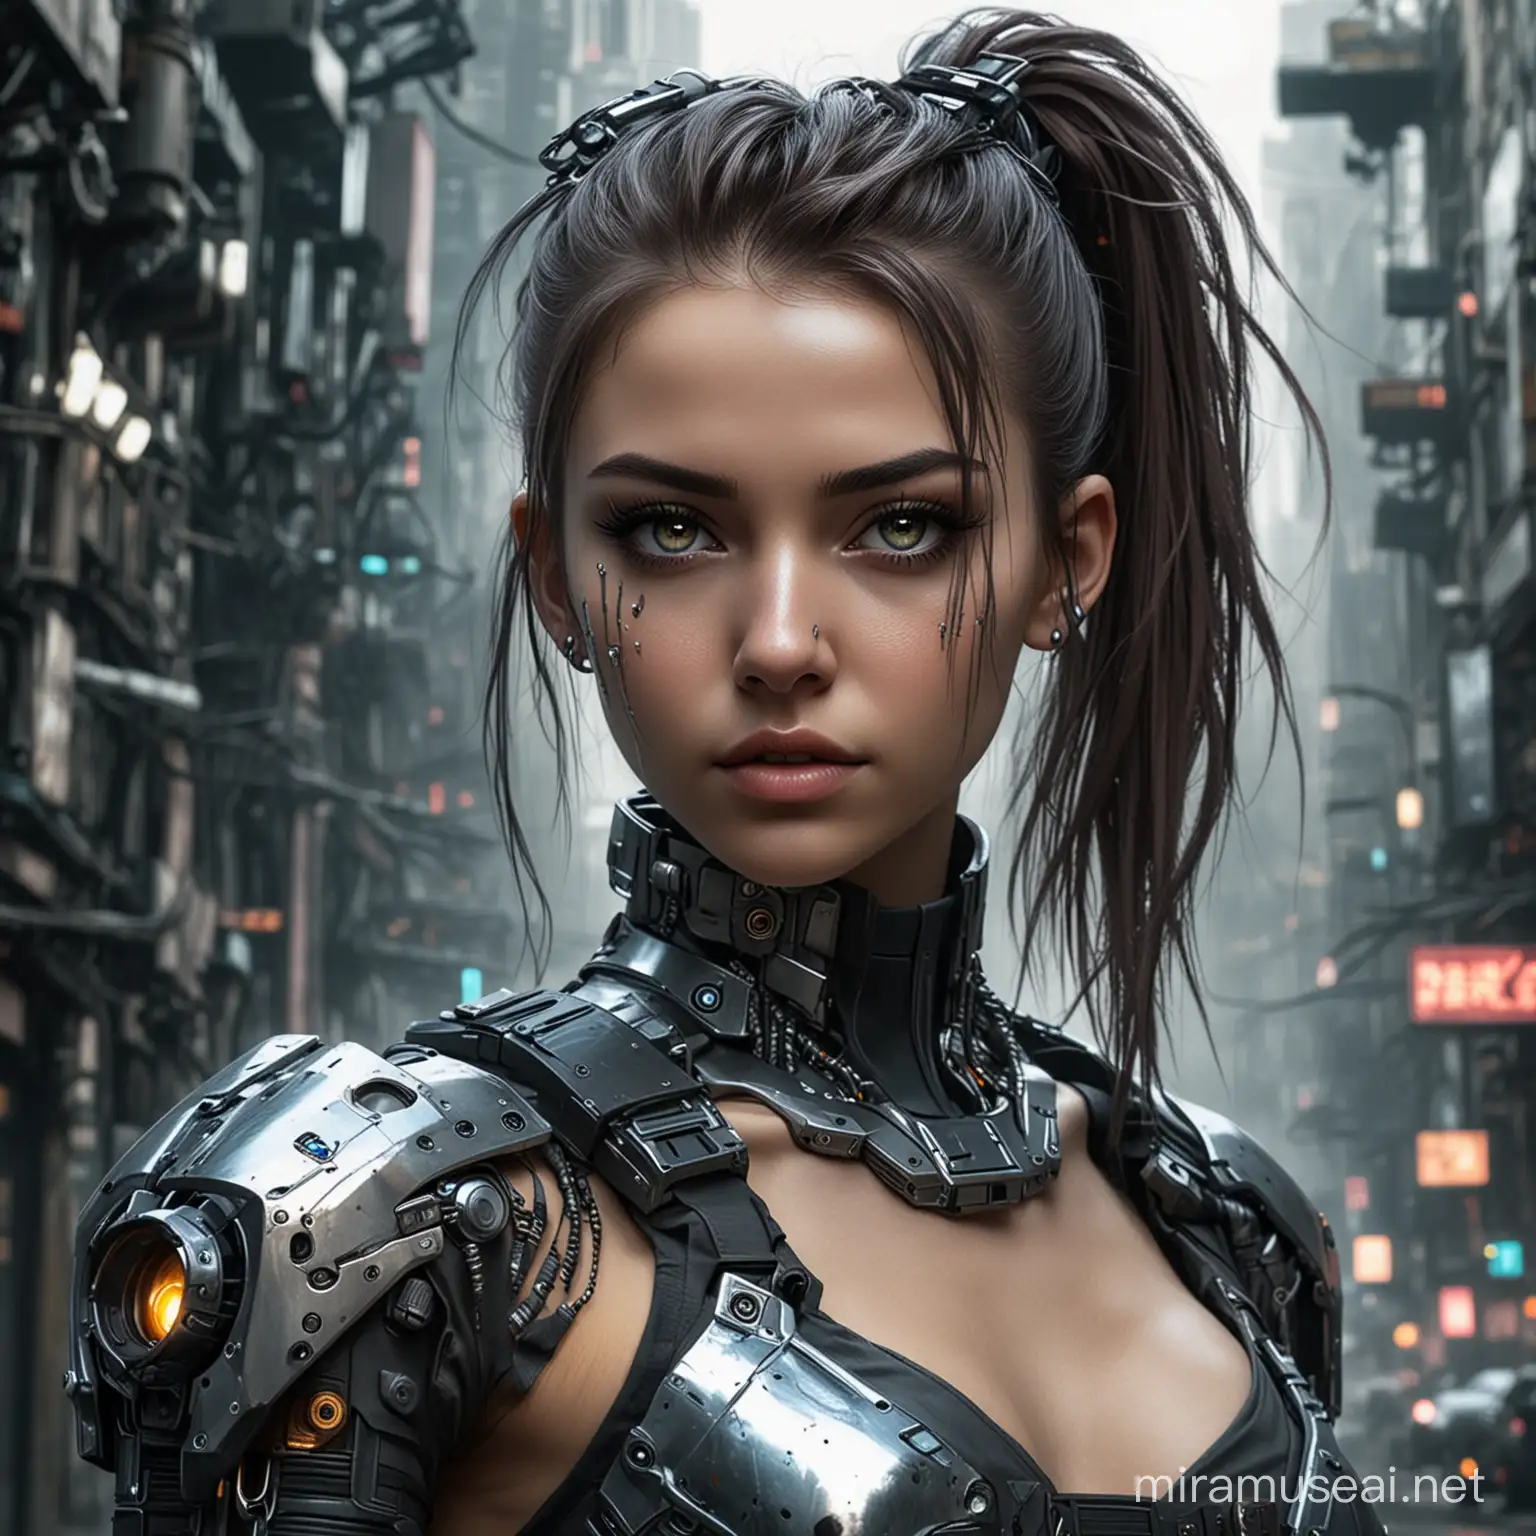 image of a  metalic cyberpunk dystopian girl with 